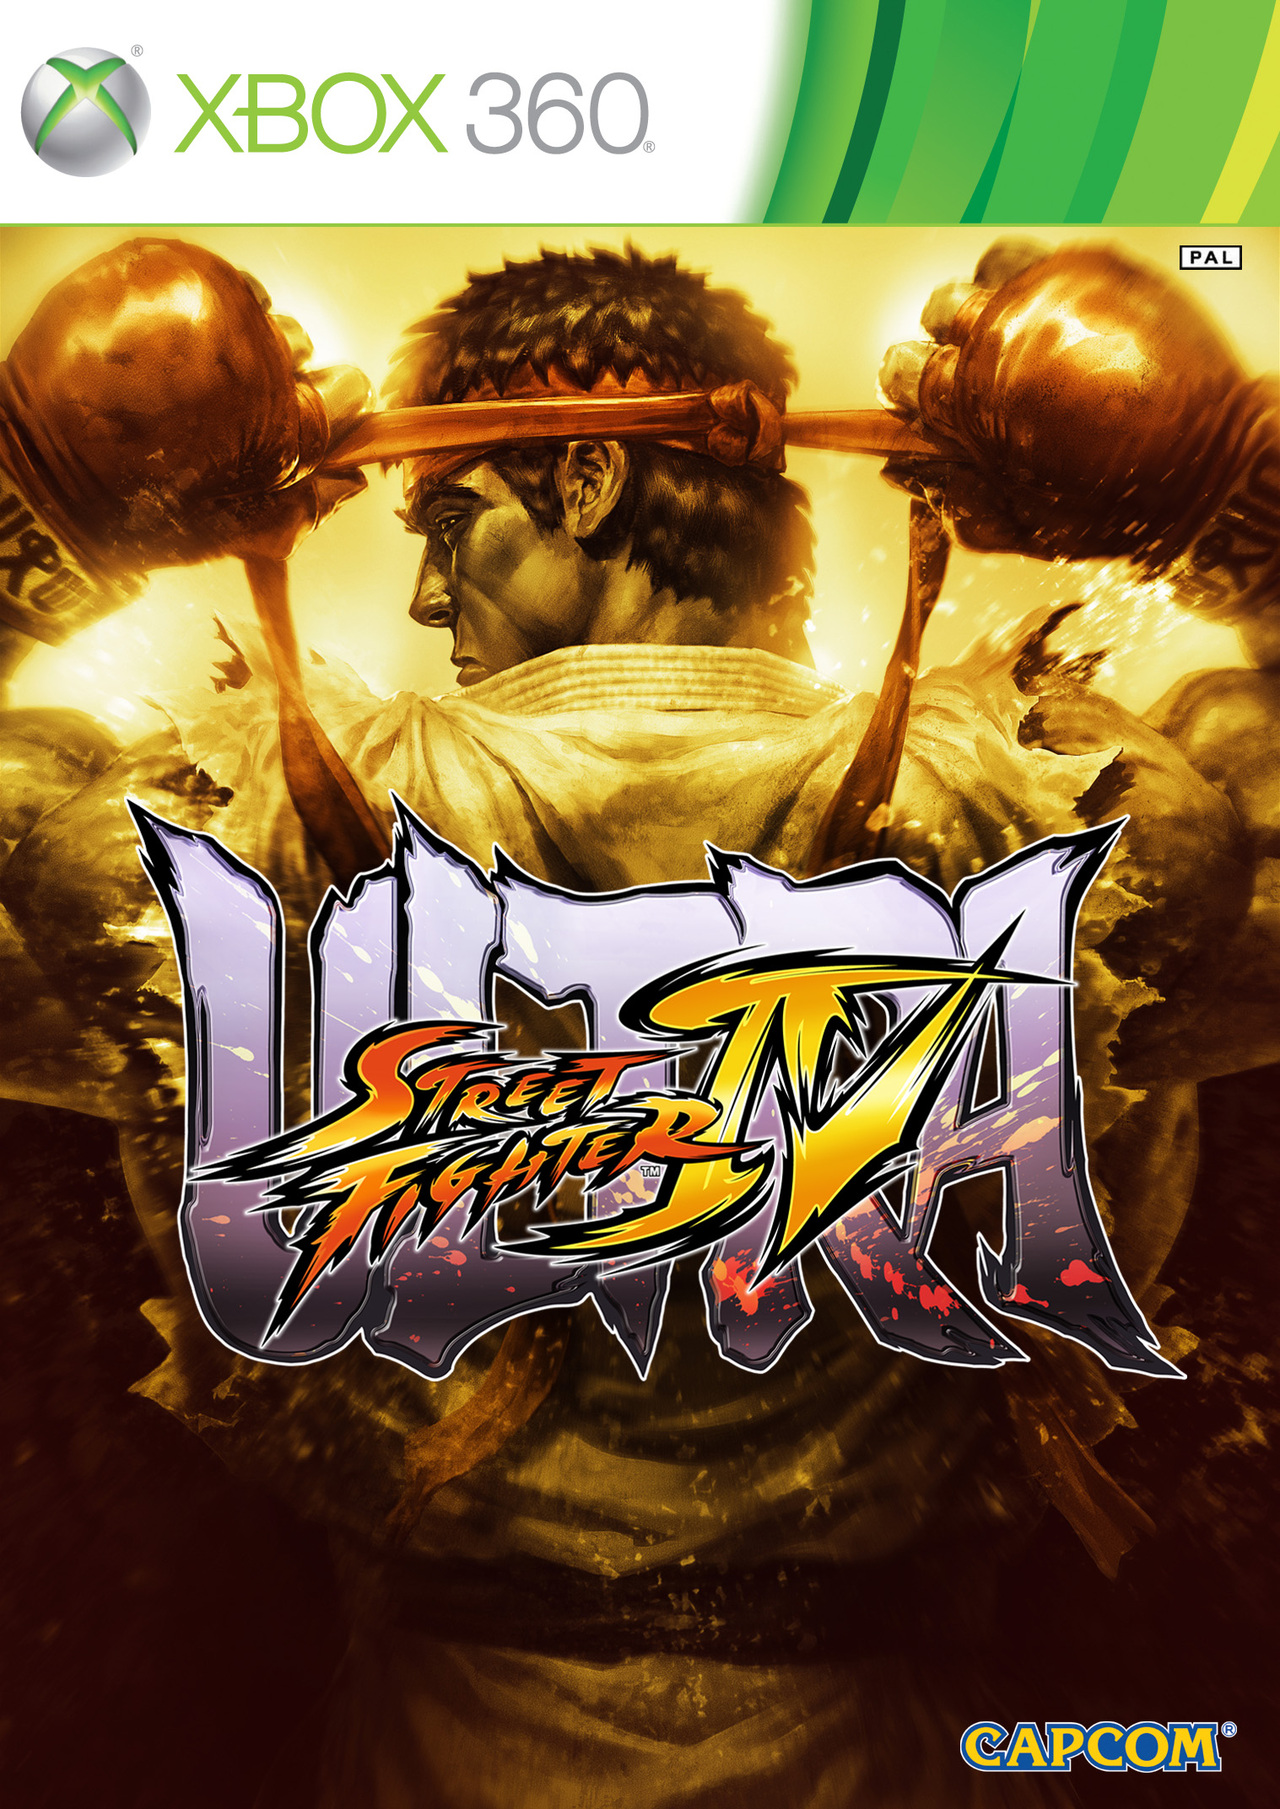 Afficher "Street Fighter n° 4Ultra Street Fighter IV"